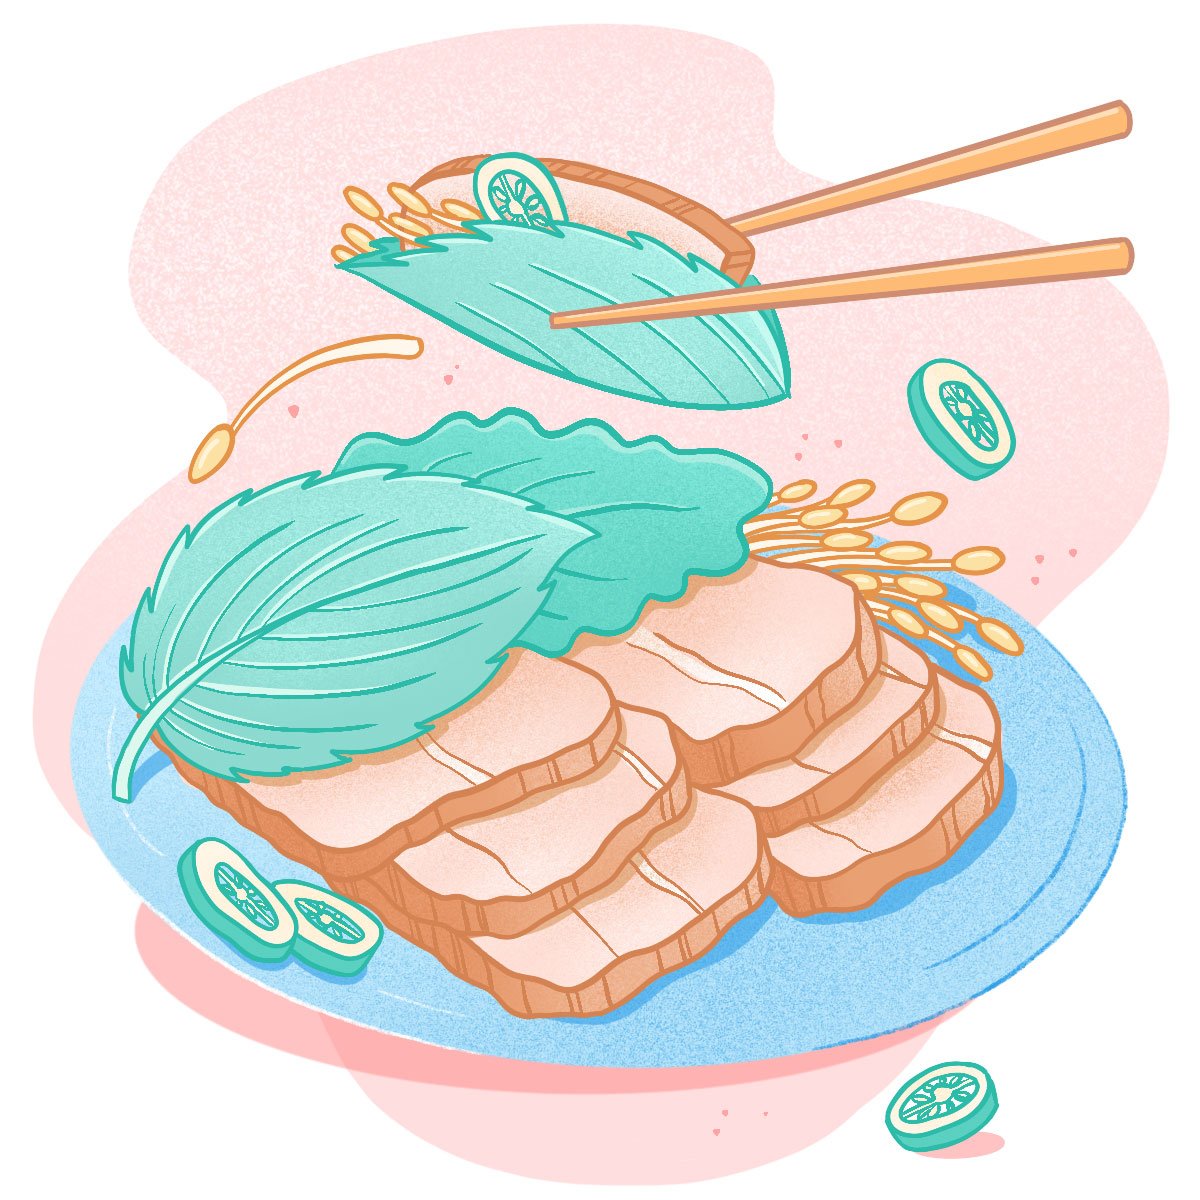 7-Han-Shin-Pocha-pork-belly-food-spot-illustration-atlanta-magazine_belindaskou.jpg